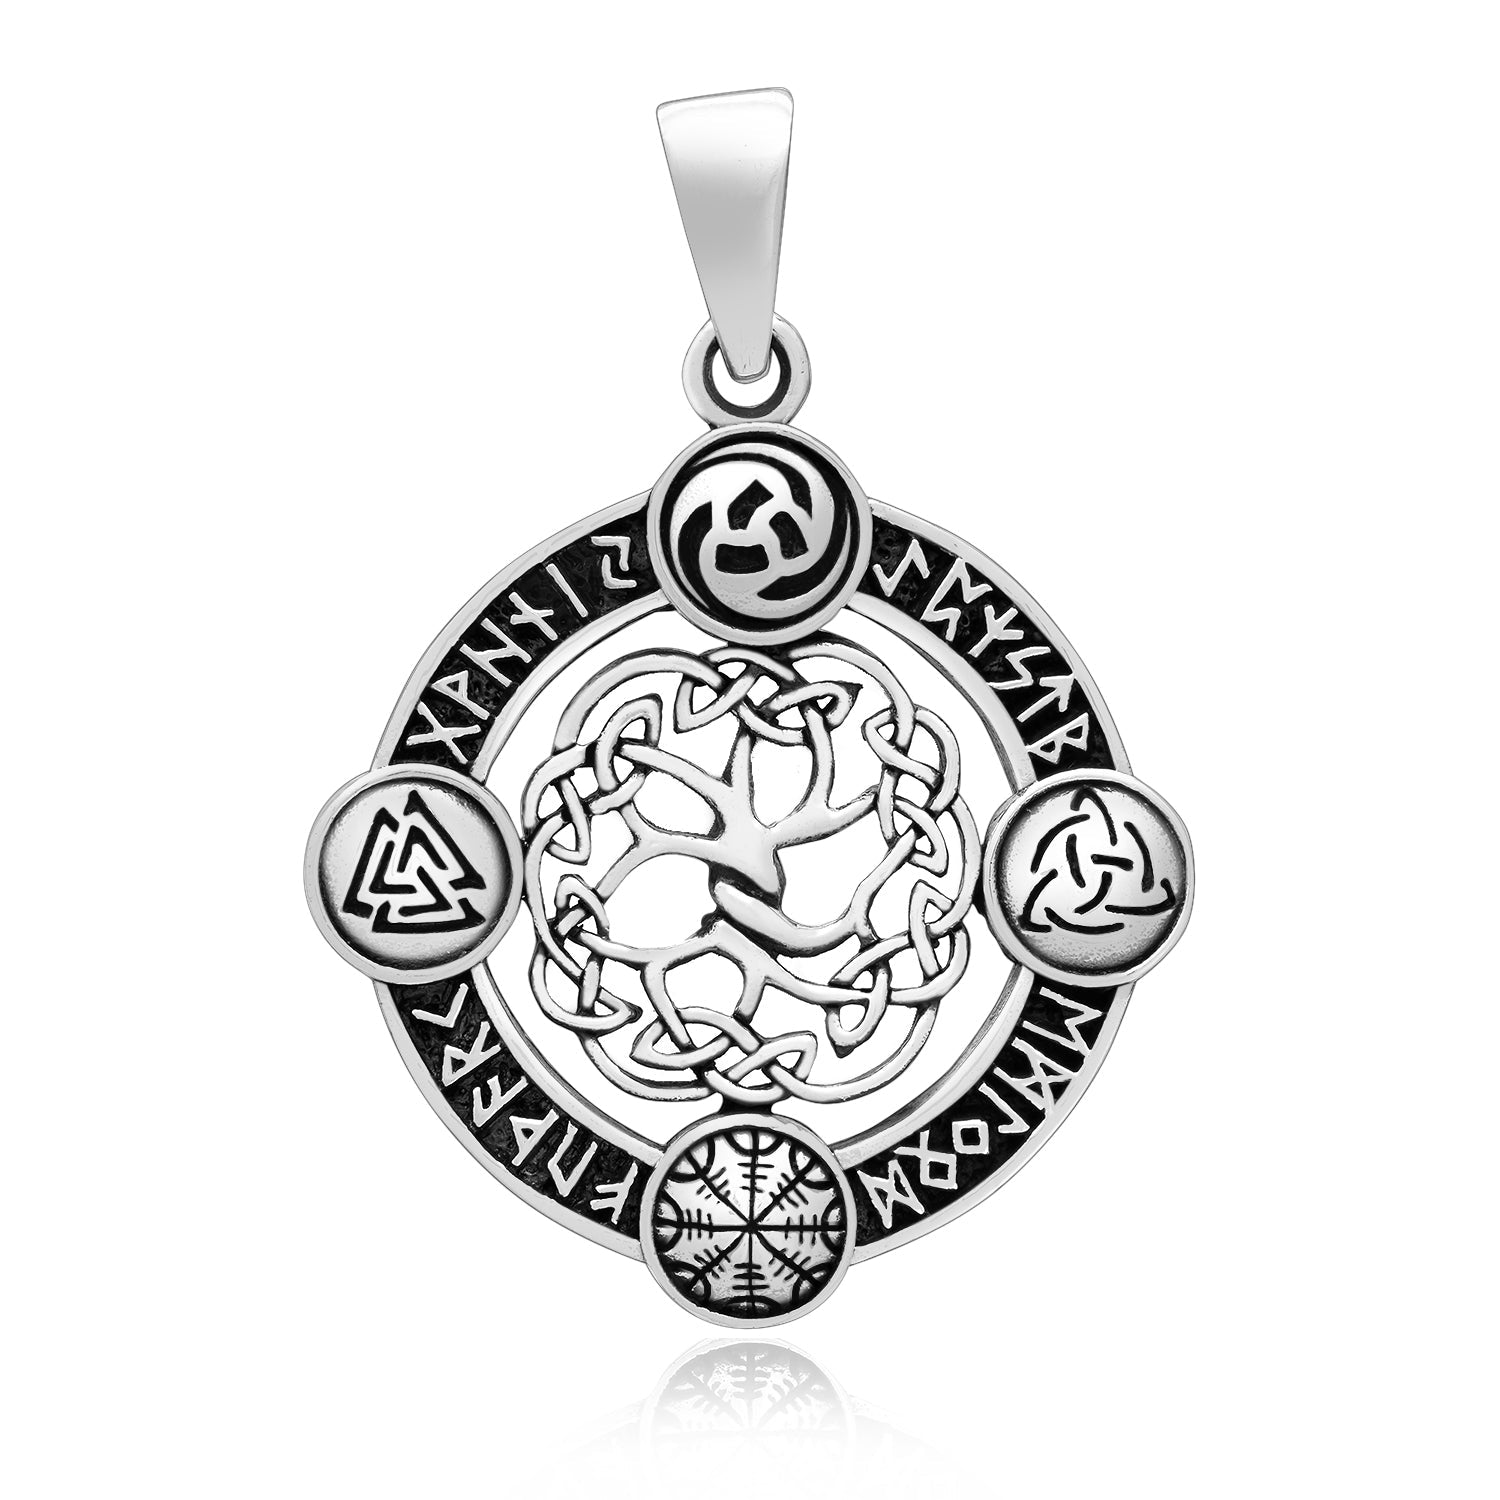 925 Silver Yggdrasil Pendant with Pagan Symbols and Runes - SilverMania925